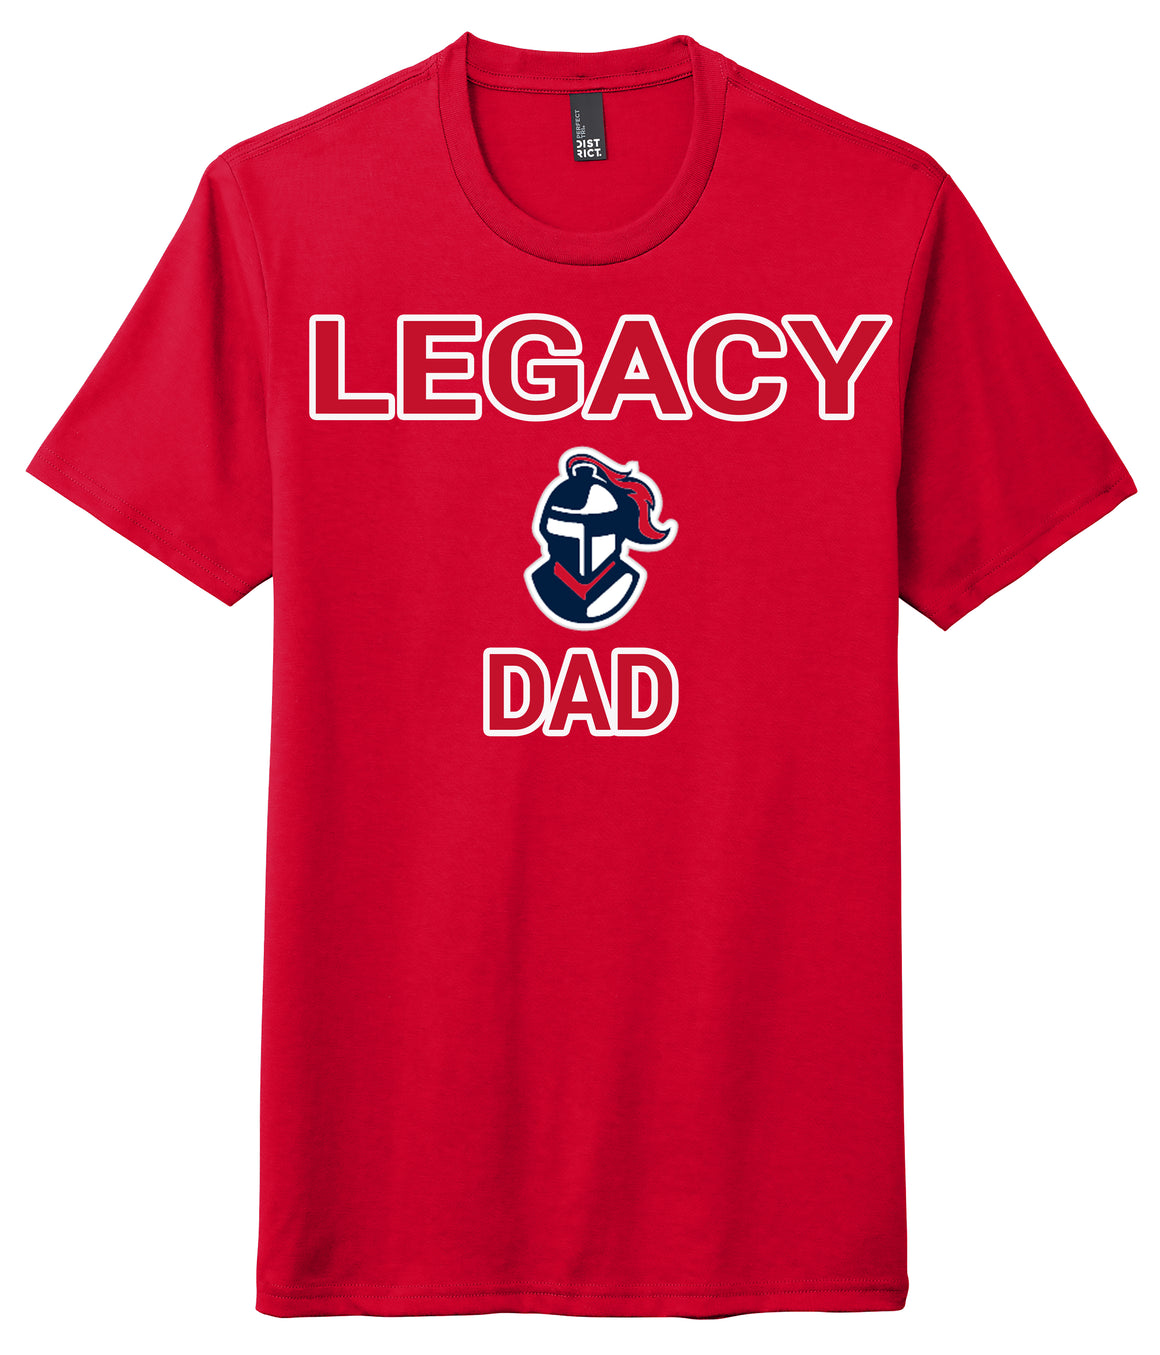 Legacy Traditional School Cadence - Dad Shirt